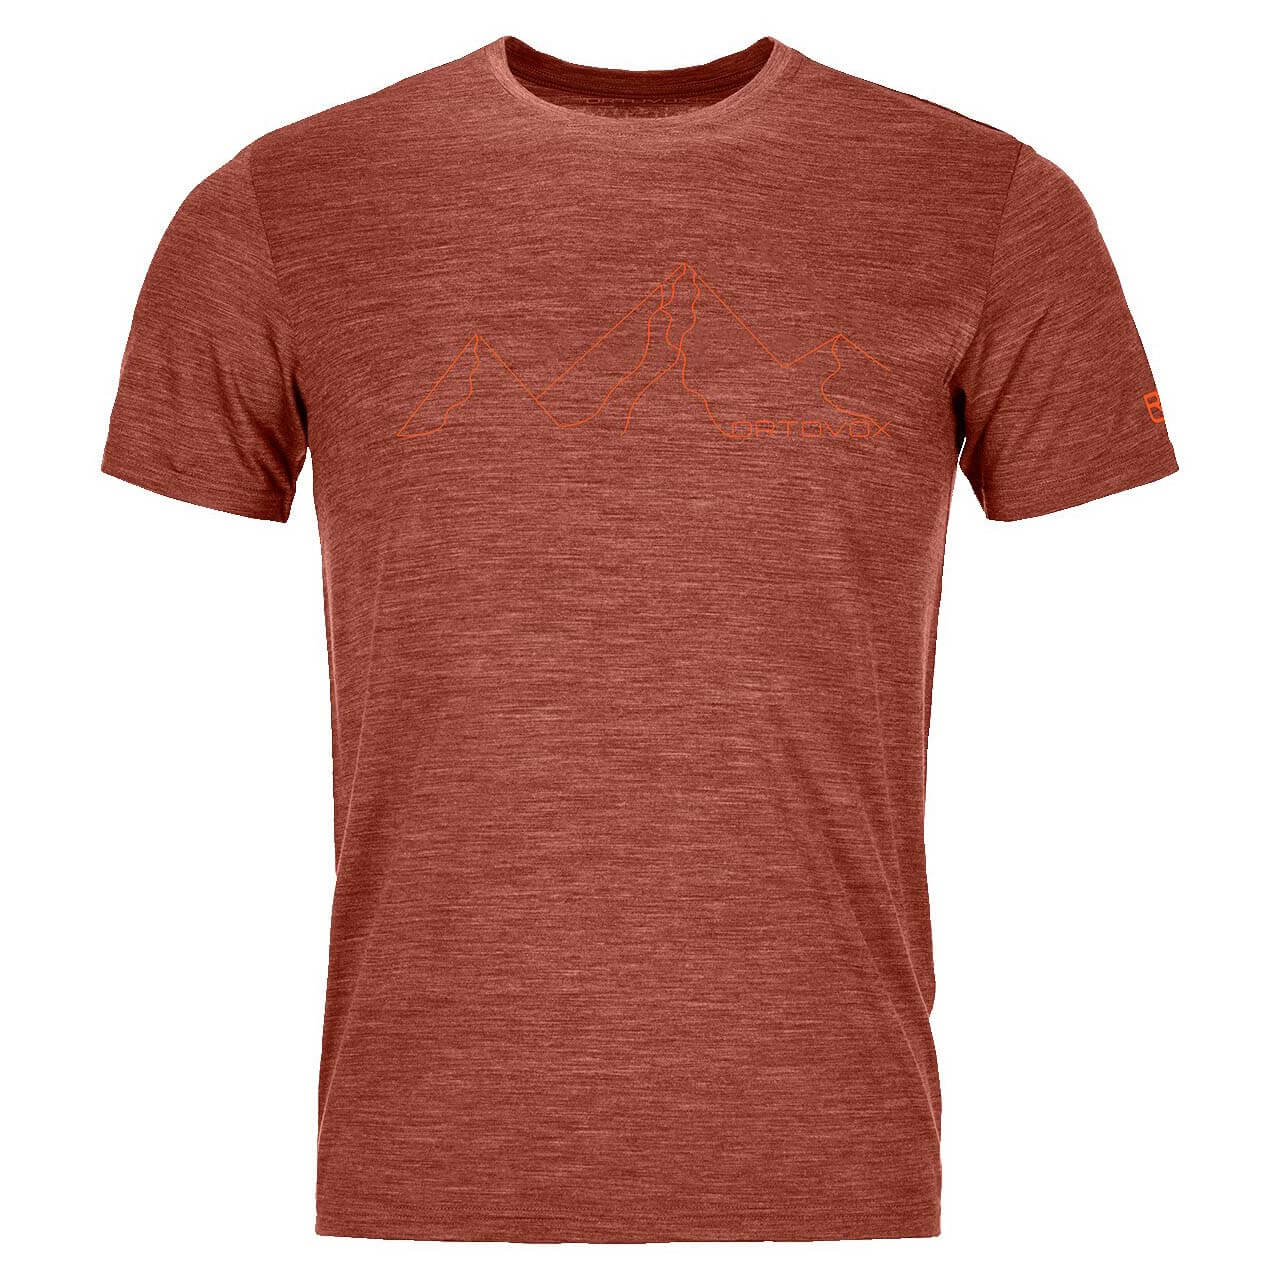 Ortovox Mountain T-Shirt 150 Cool - Clay Orange Blend, L